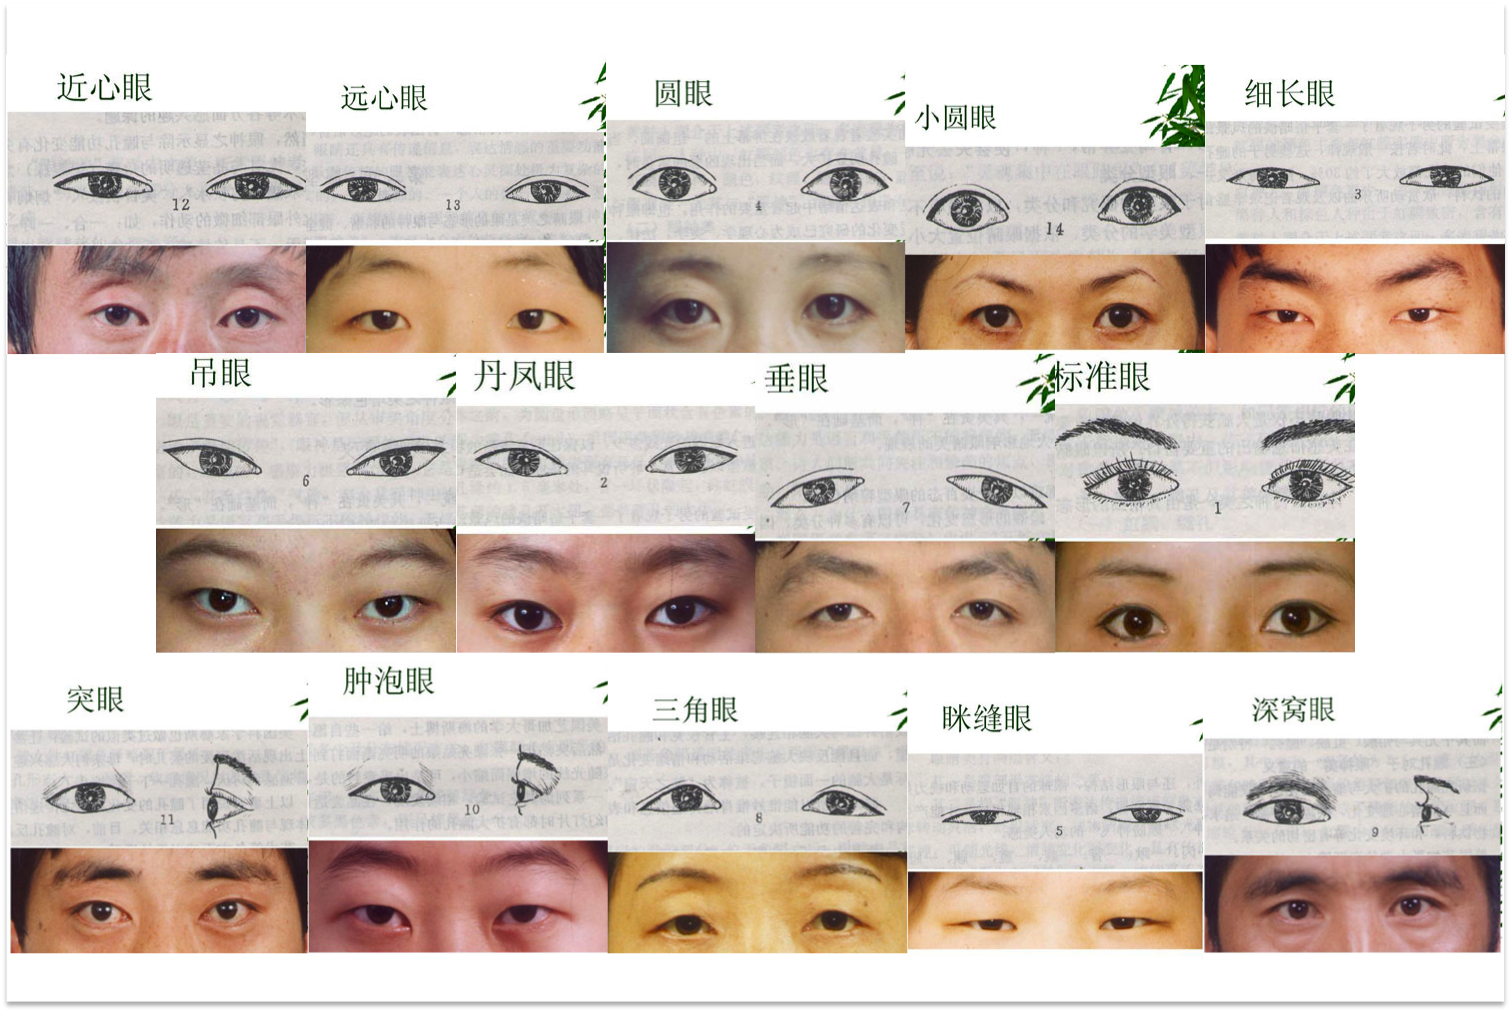 Глаза караты. Разрез глаз разных наций. Азиатский Тип глаз. Глаз в разрезе. Азиатский разрез глаза.